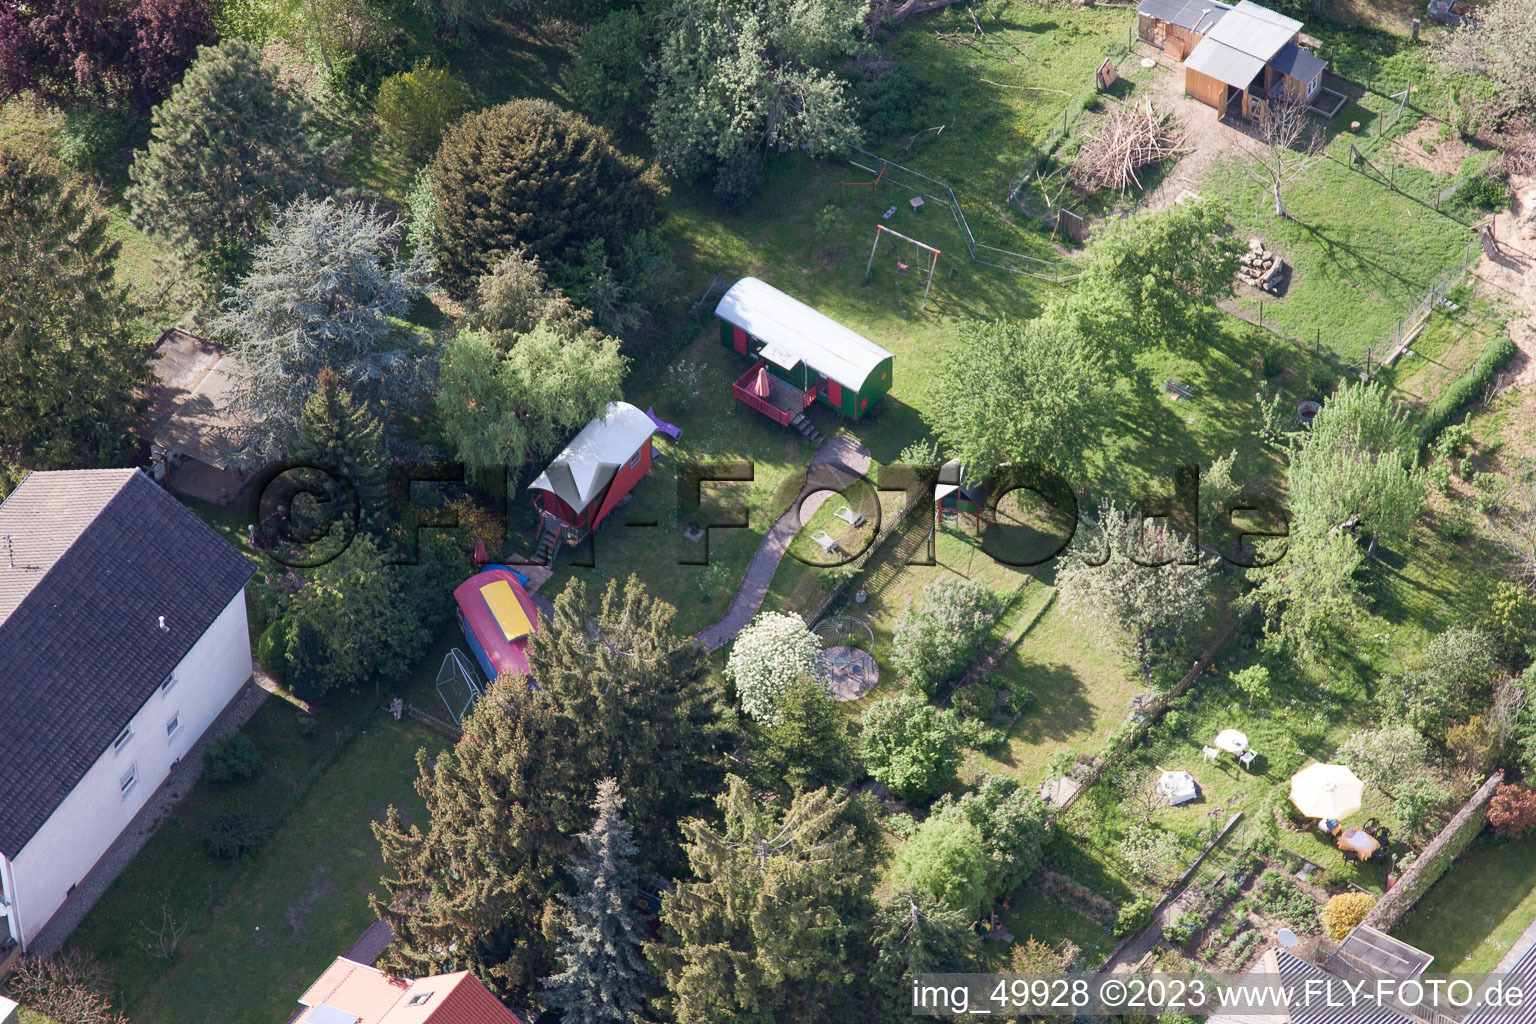 Drone image of Saarstrasse Villa Kunterbunt in Kandel in the state Rhineland-Palatinate, Germany